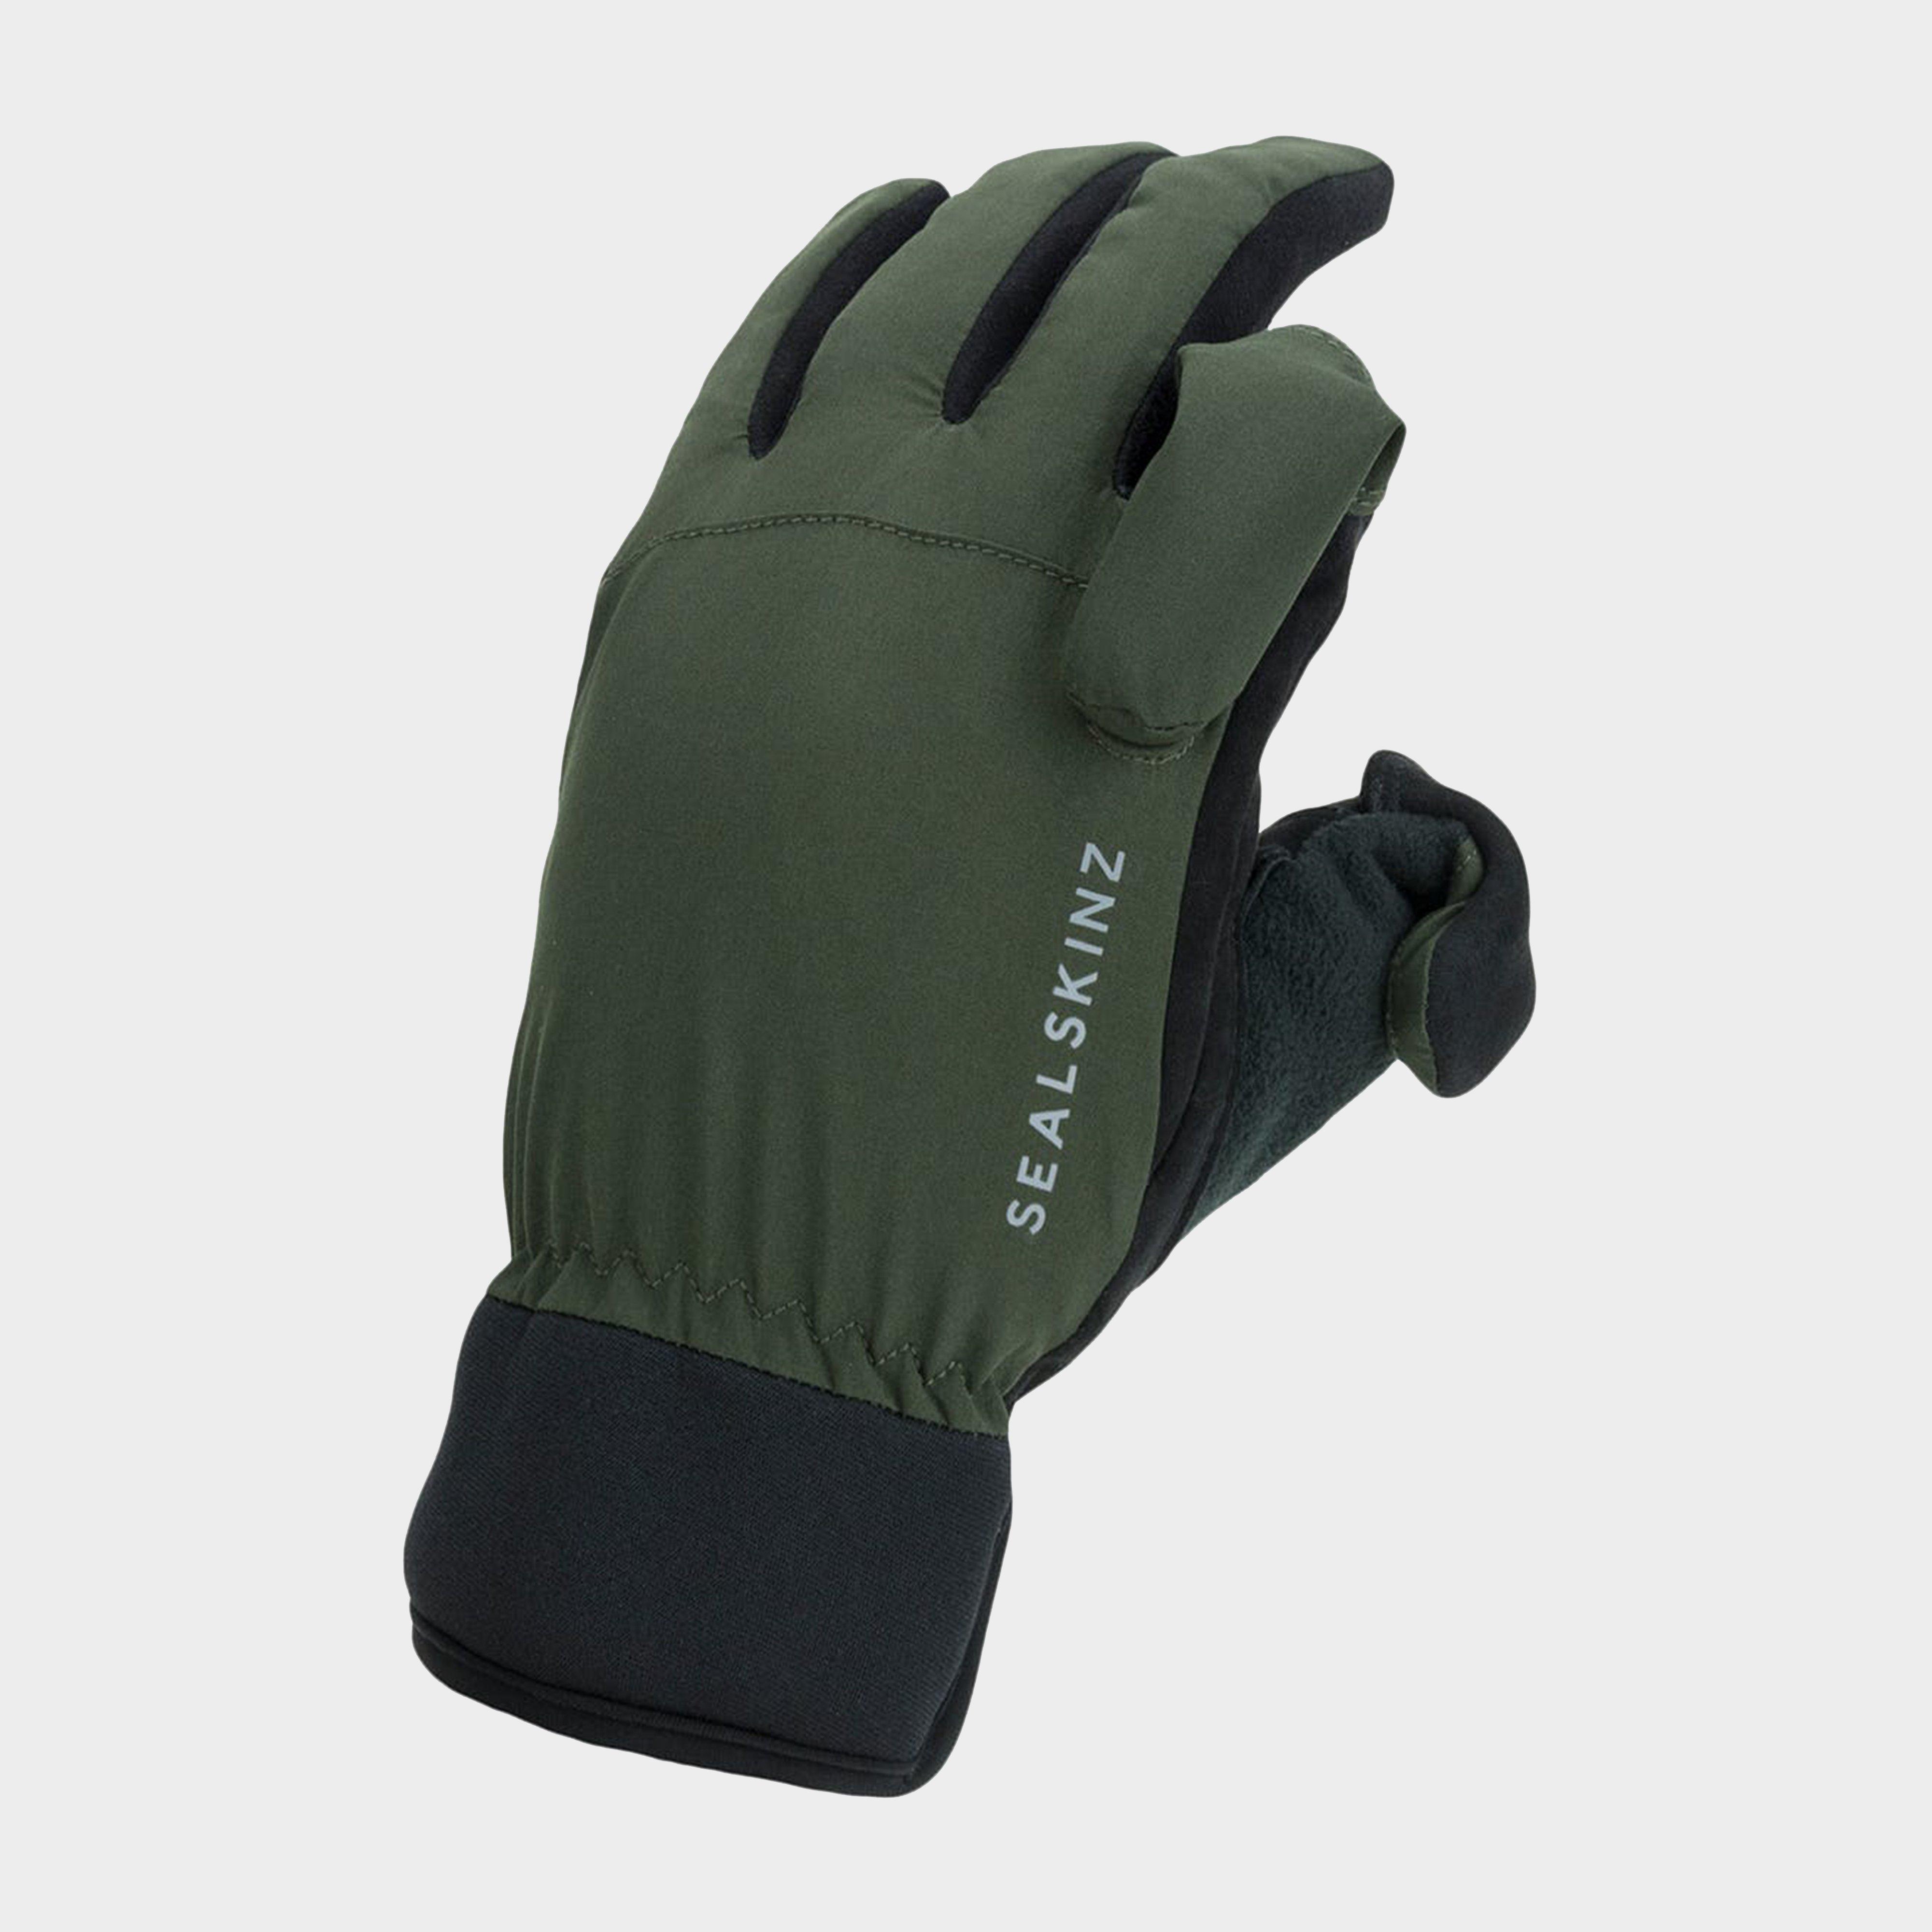 SealSkinz Sealskinz Waterproof All Weather Sporting Gloves - Black, Black